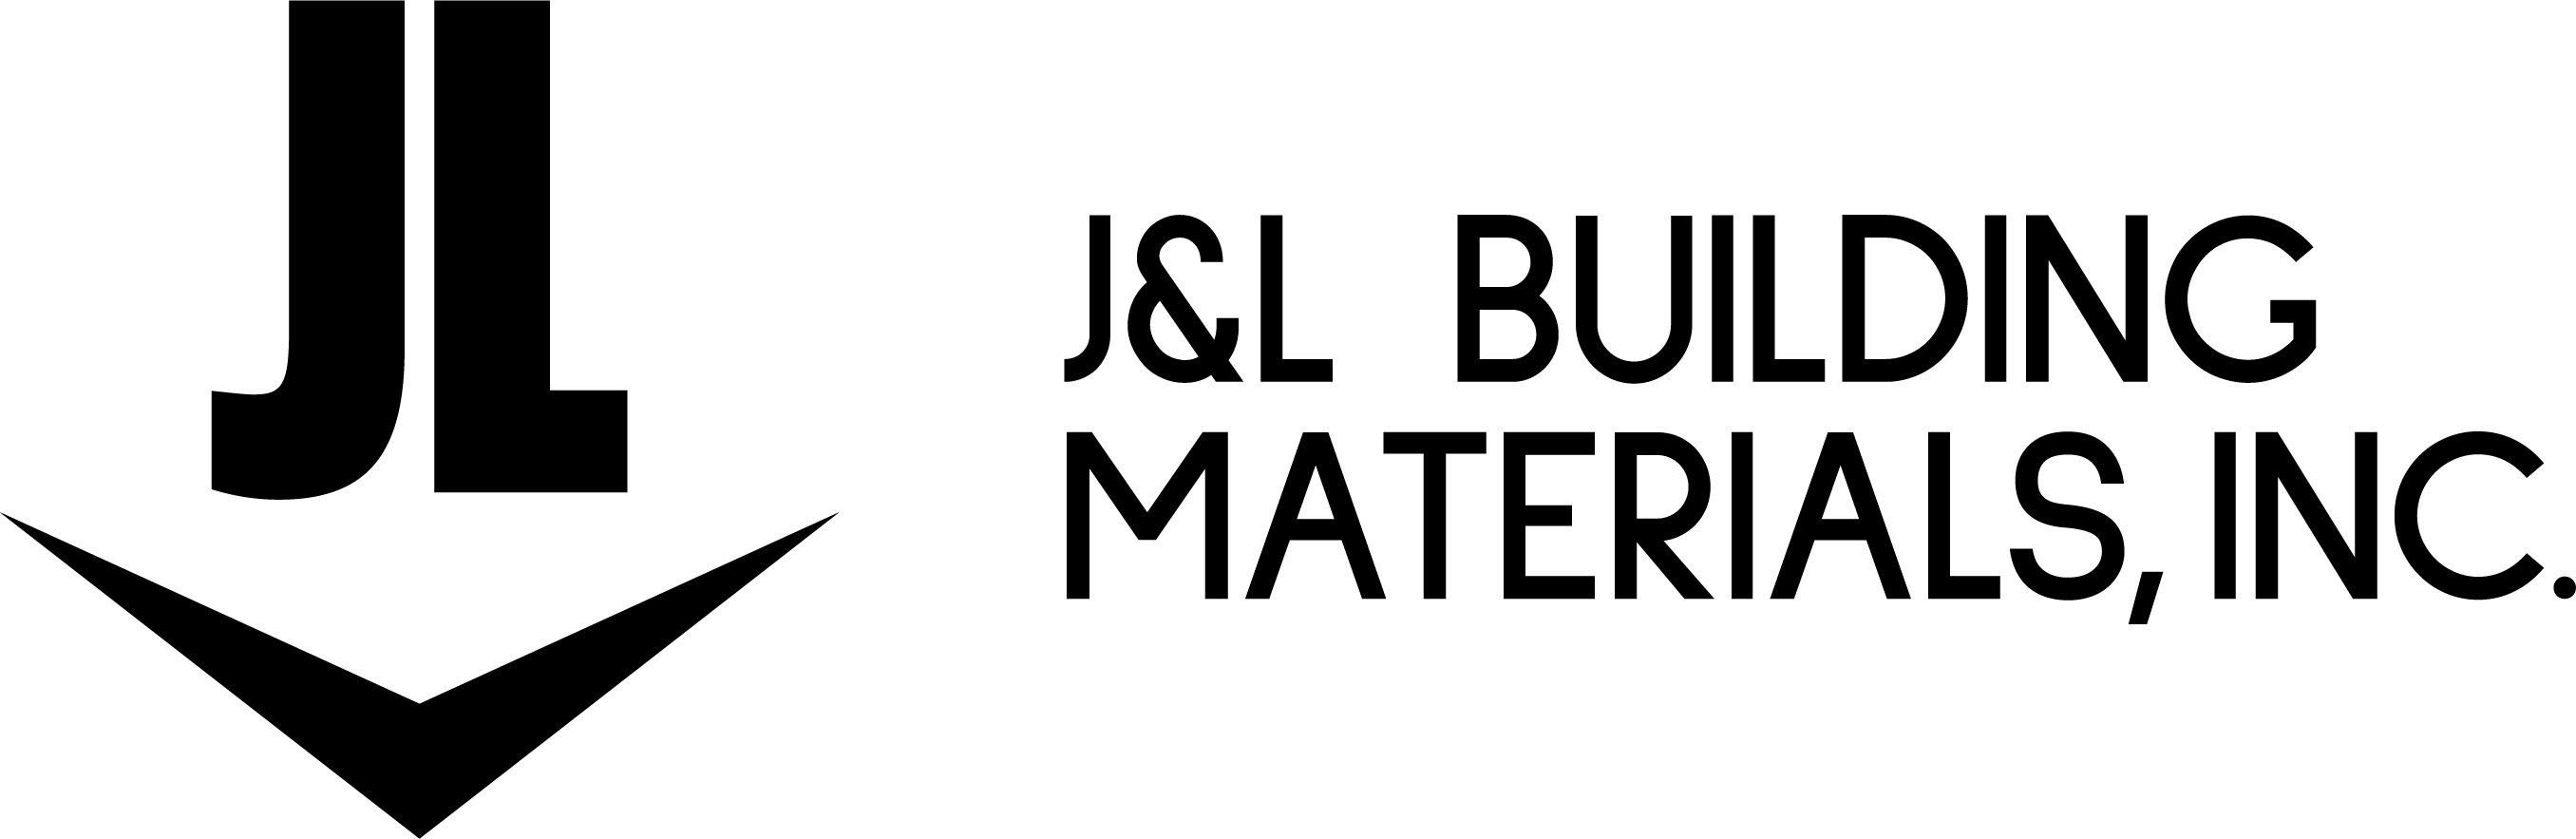 J&L Building Materials, Inc. logo in black